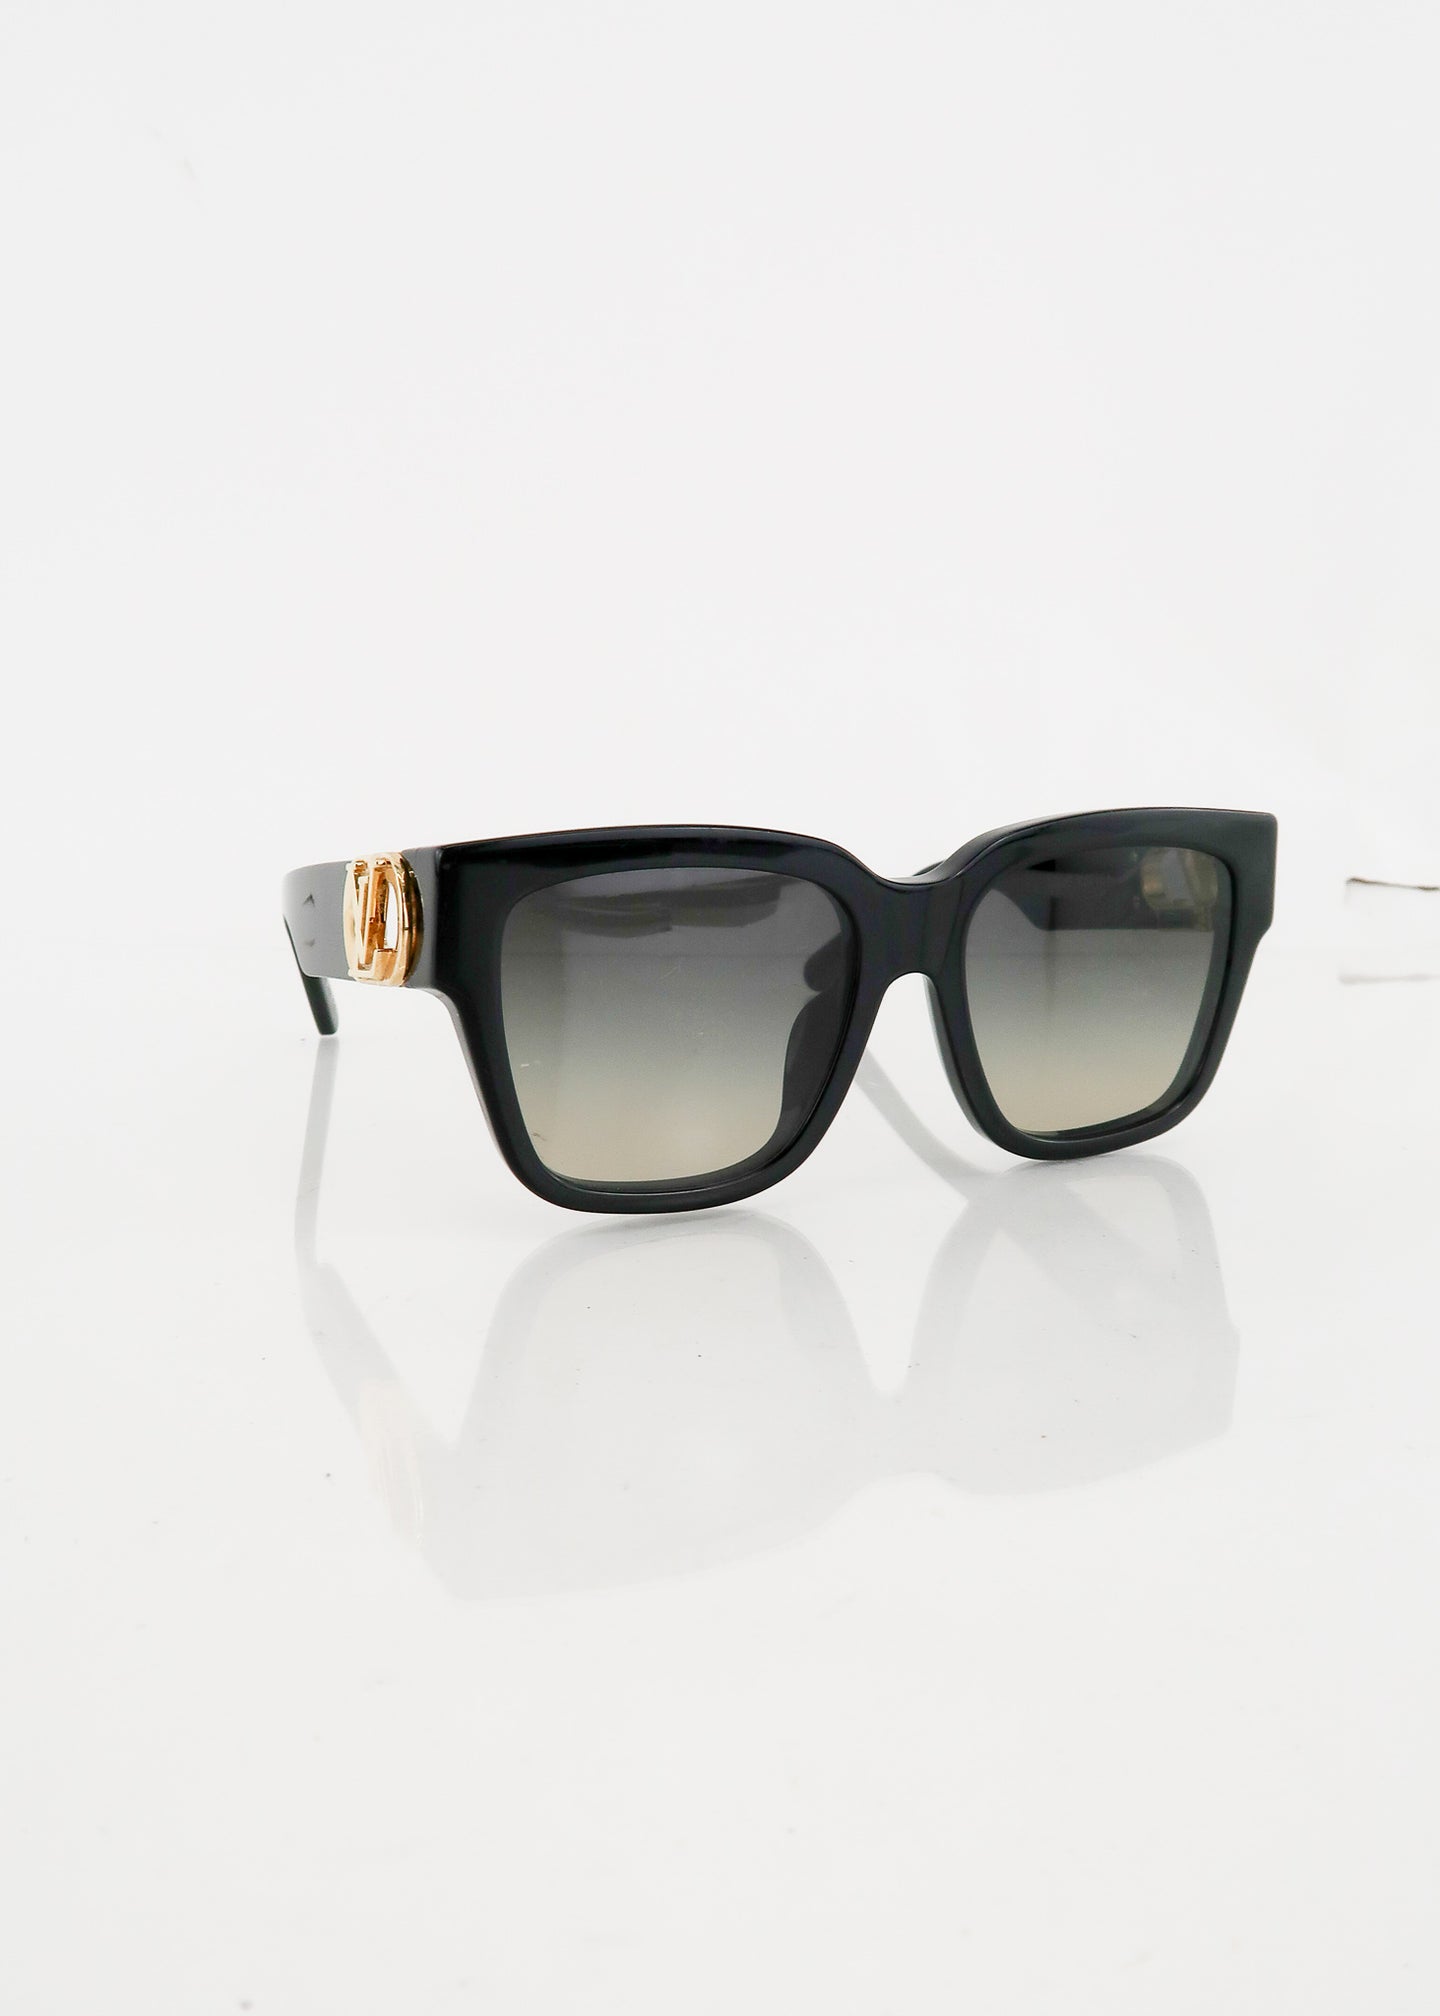 Louis Vuitton - Authenticated Sunglasses - Plastic Black for Women, Very Good Condition